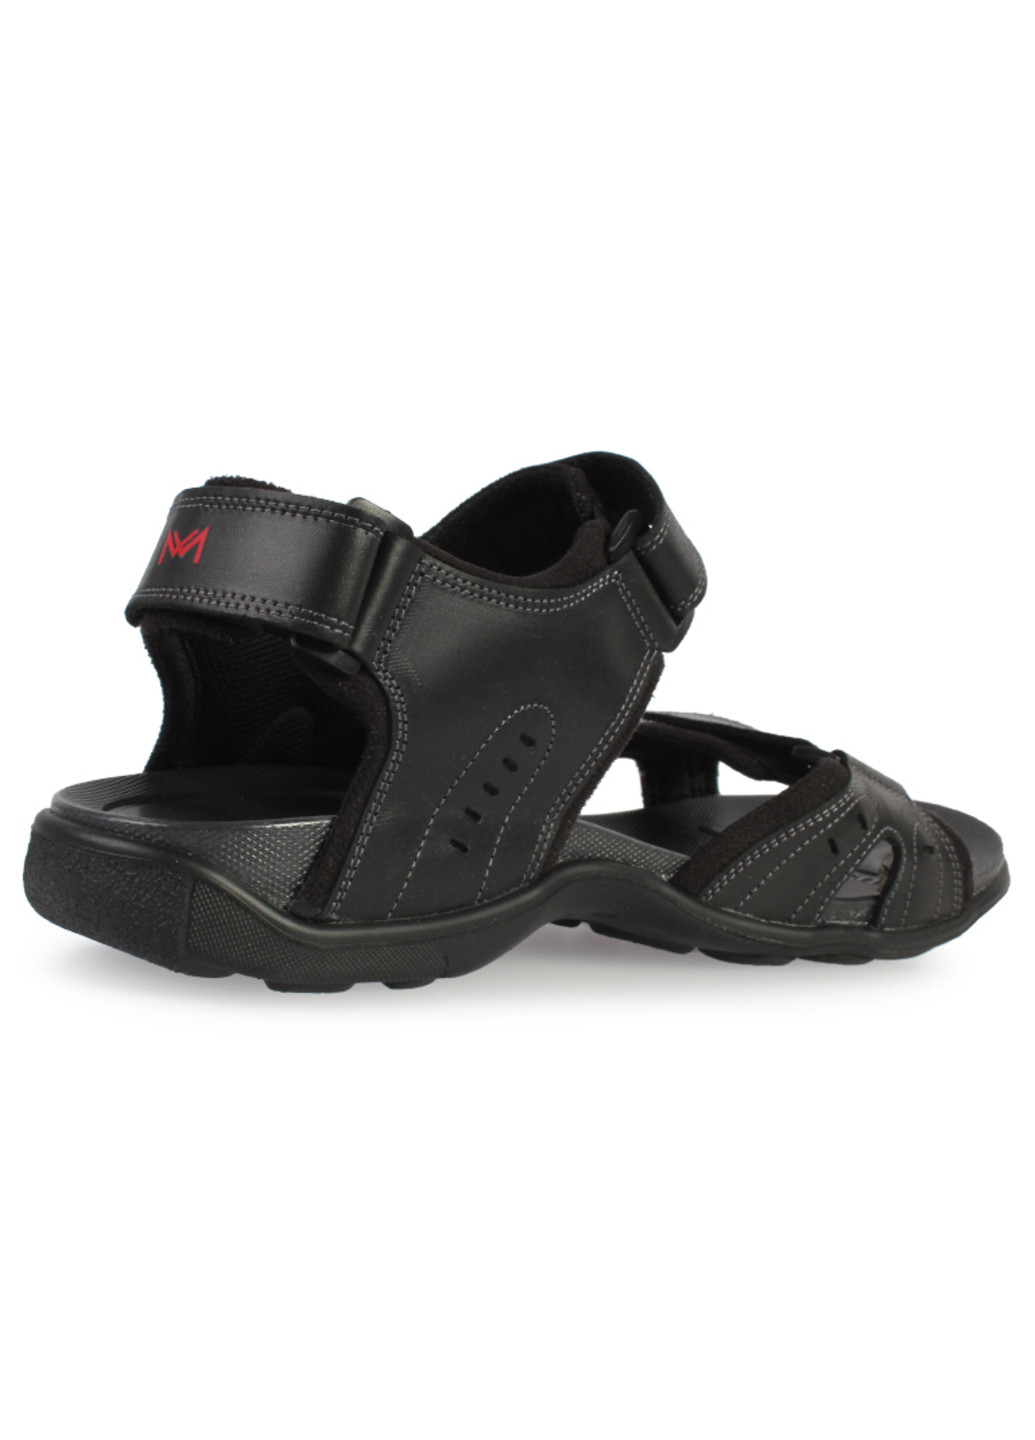 Спортивные сандалии мужские бренда 9301312_(1) One Way на липучке